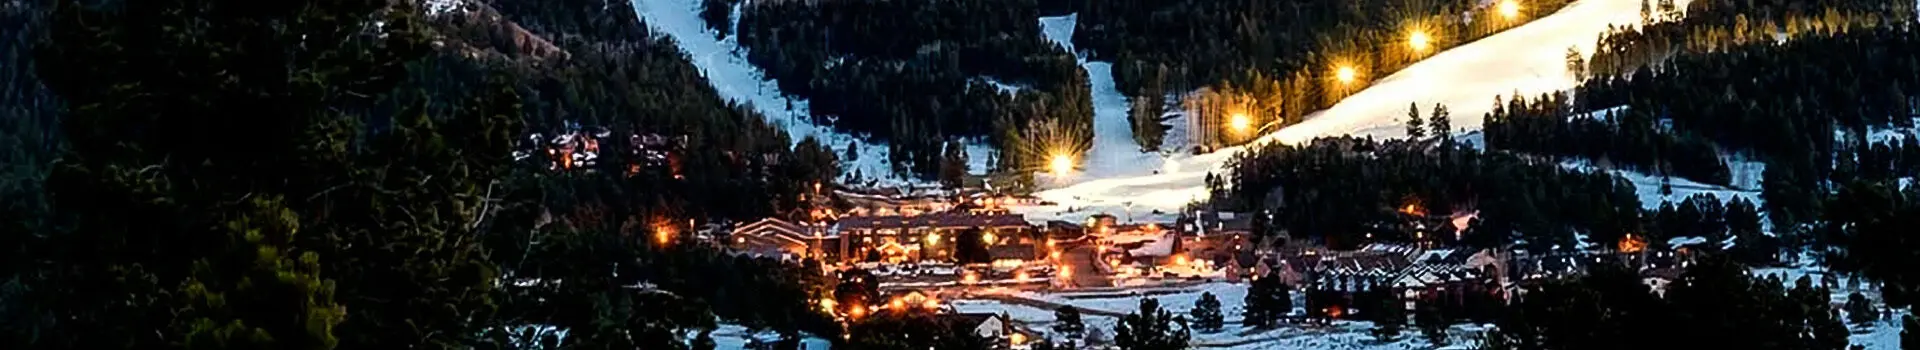 Angel Fire Ski Valley at night